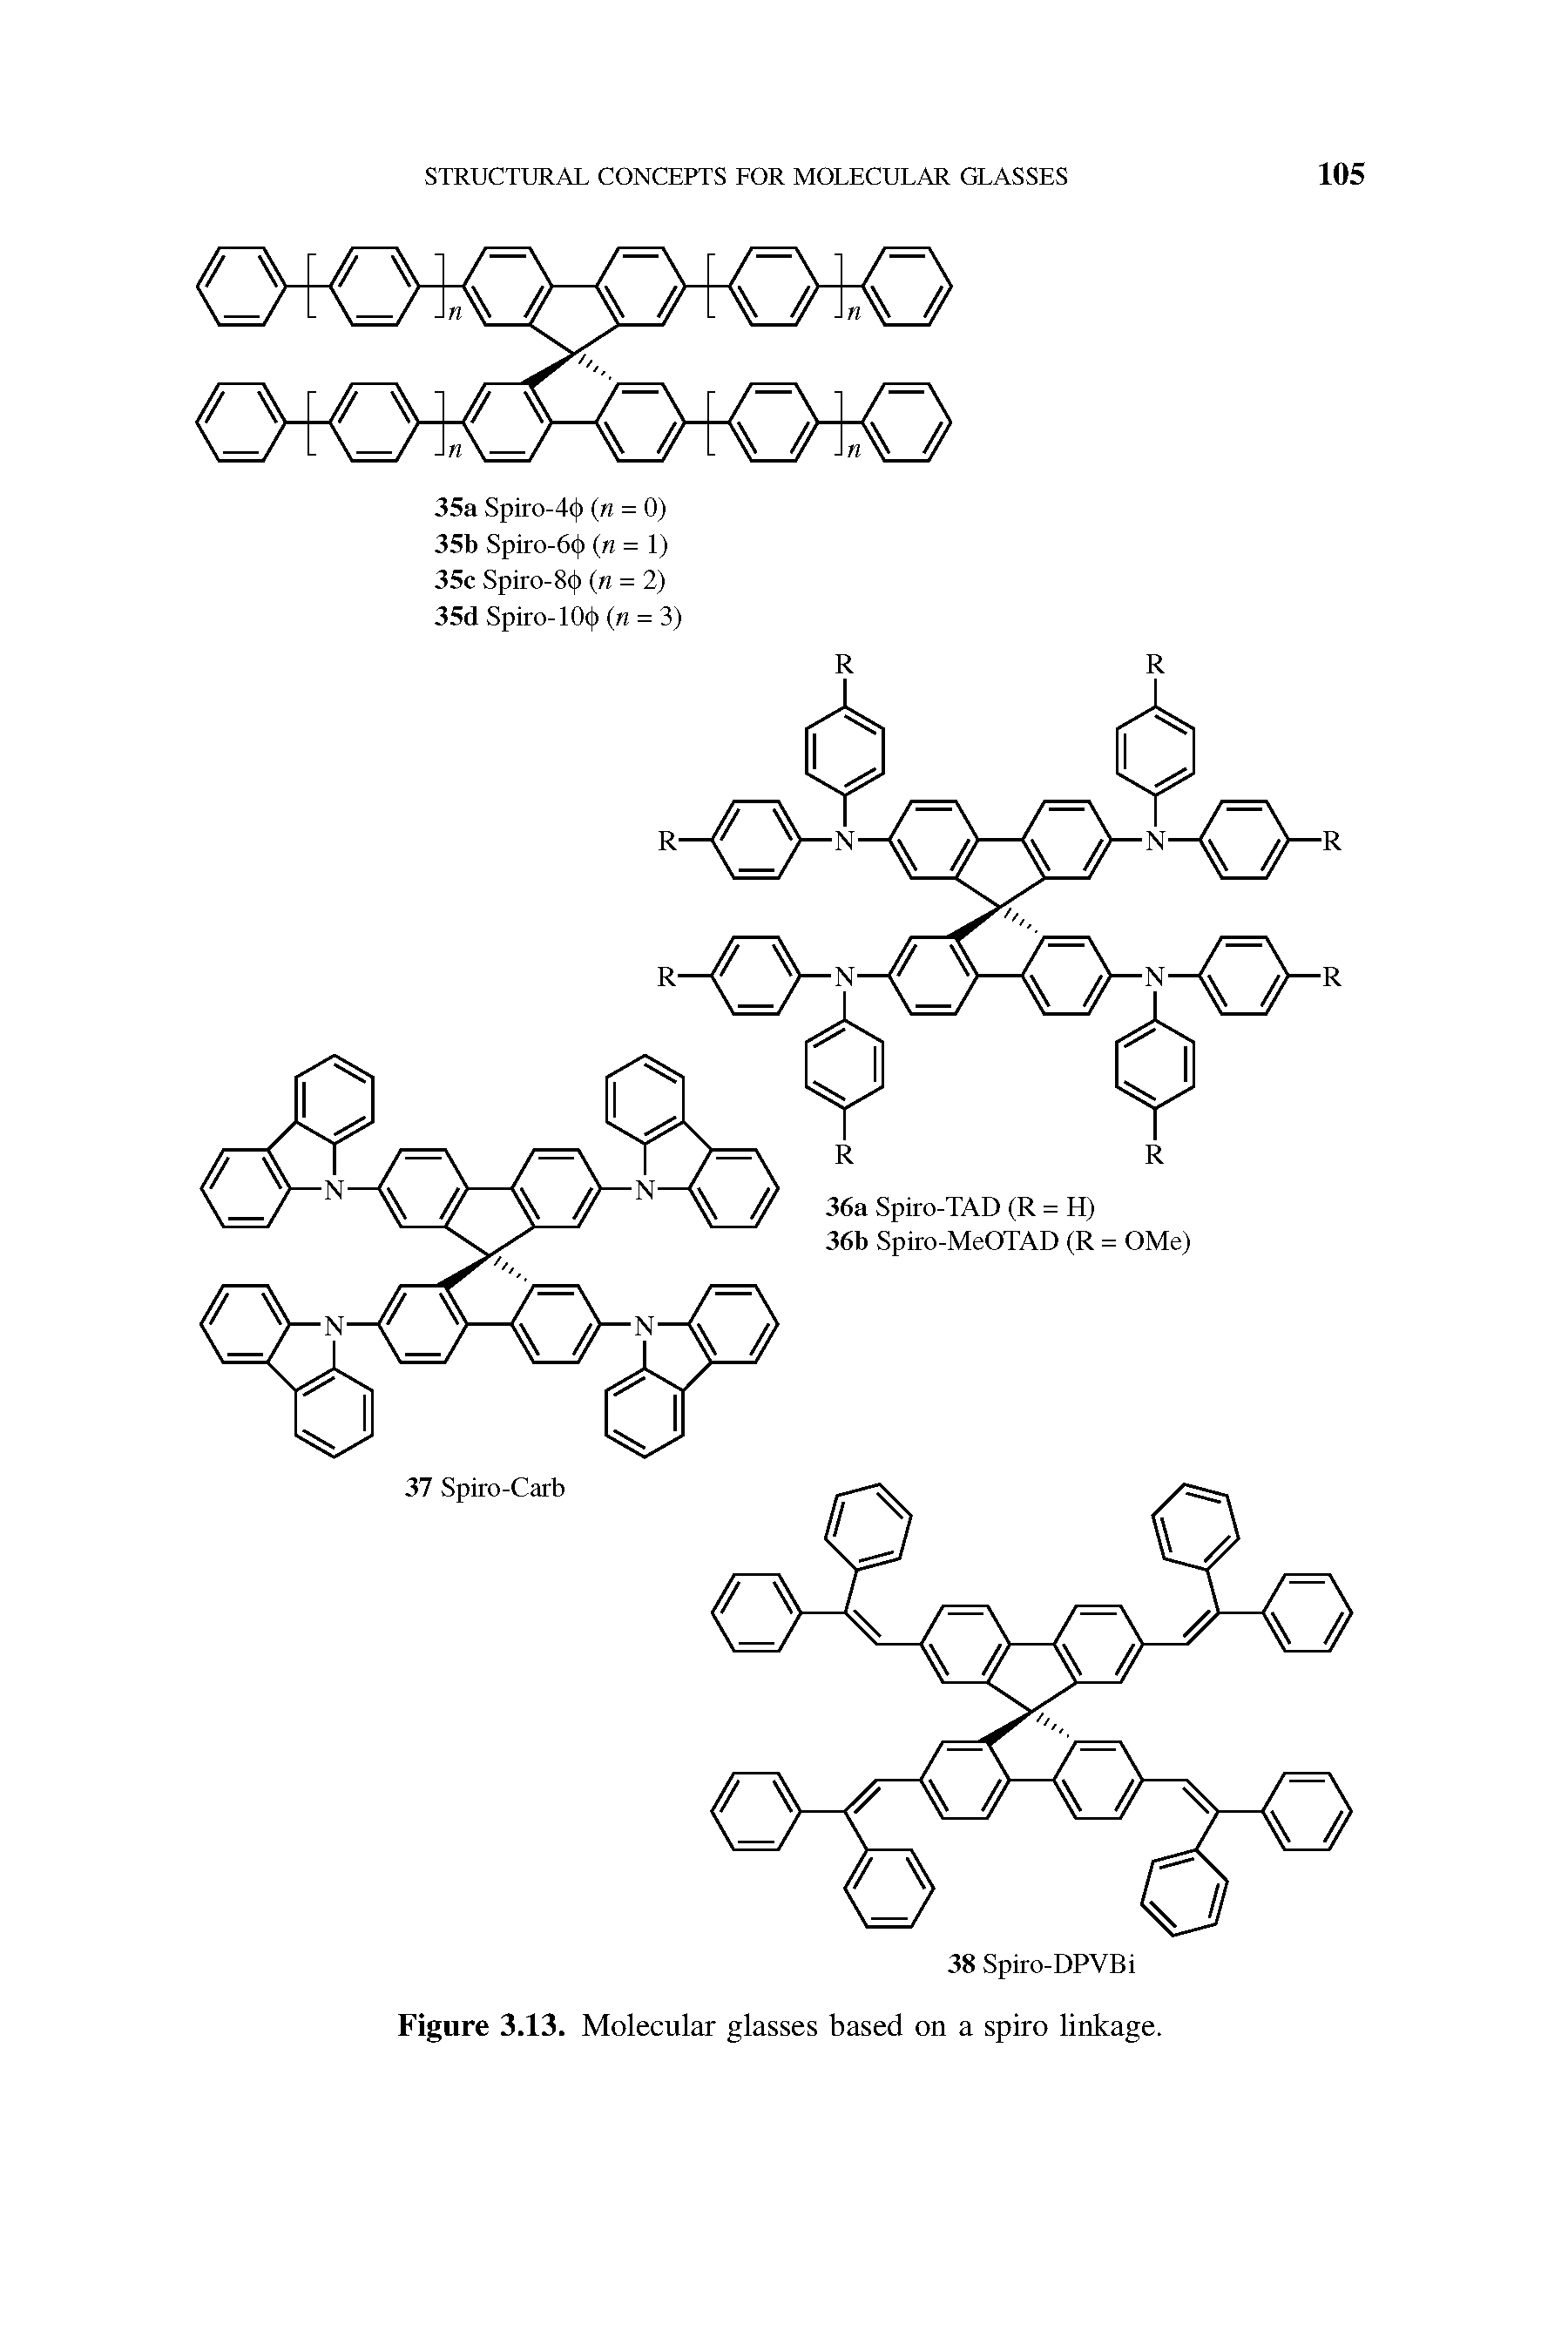 Figure 3.13. Molecular glasses based on a spiro linkage.